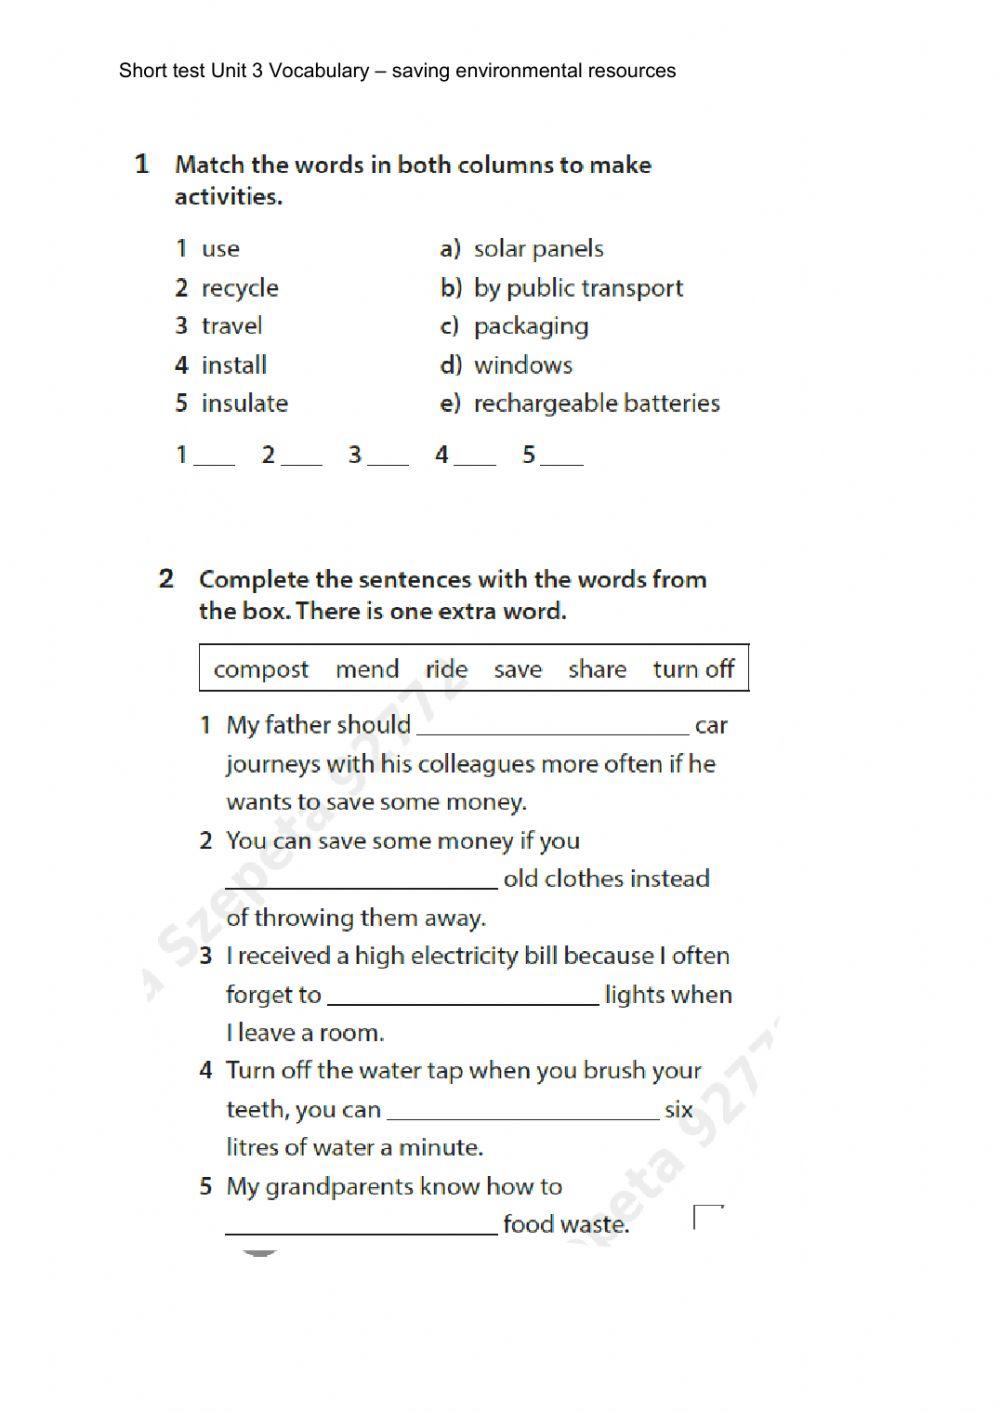 Short test vocabulary